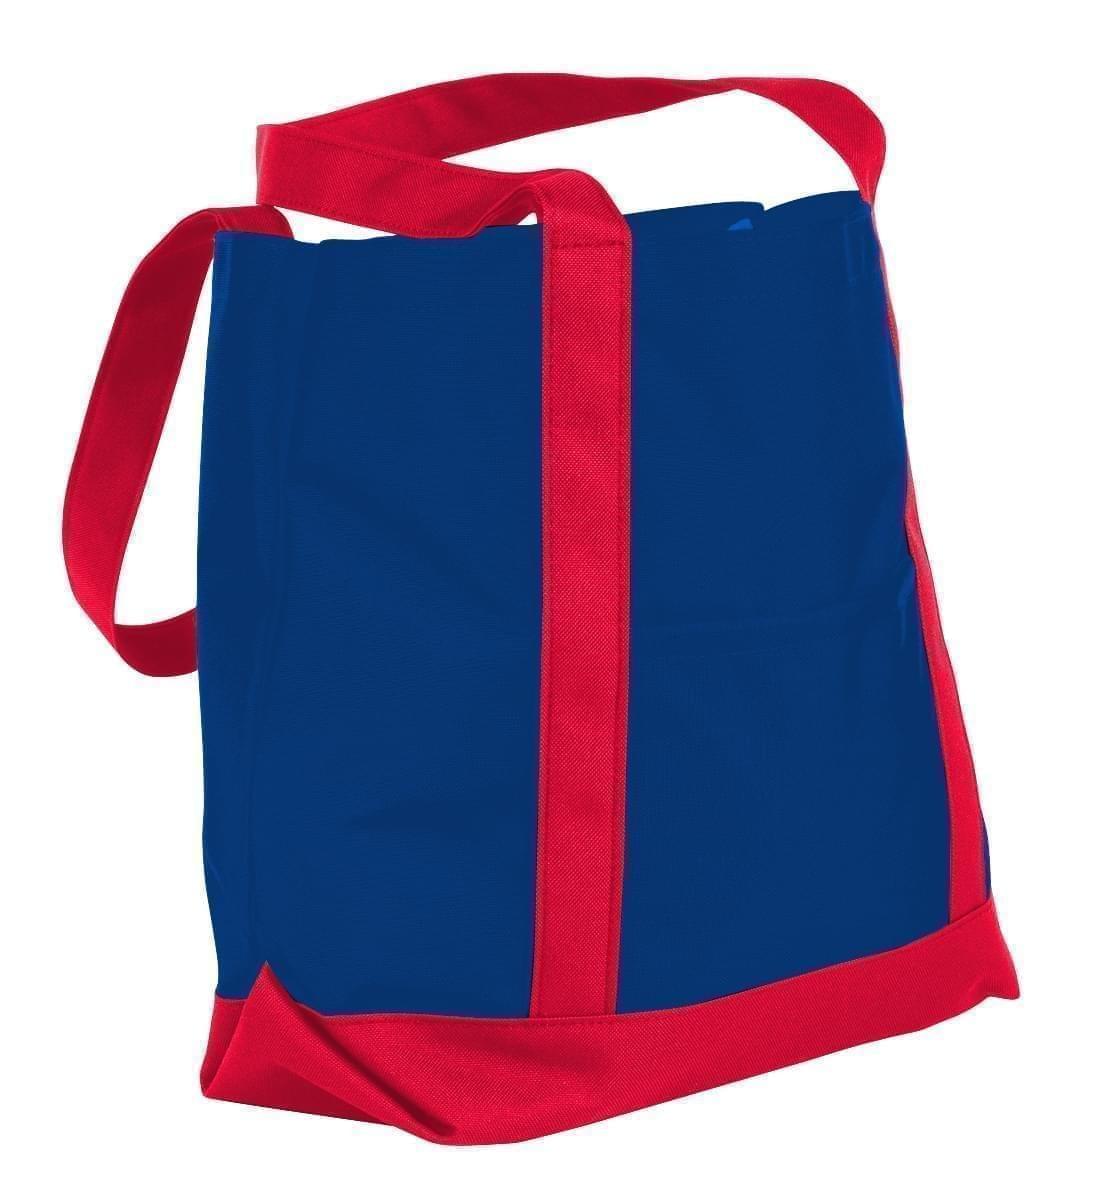 USA Made Canvas Fashion Tote Bags, Royal Blue-Red, XAACL1UAFL